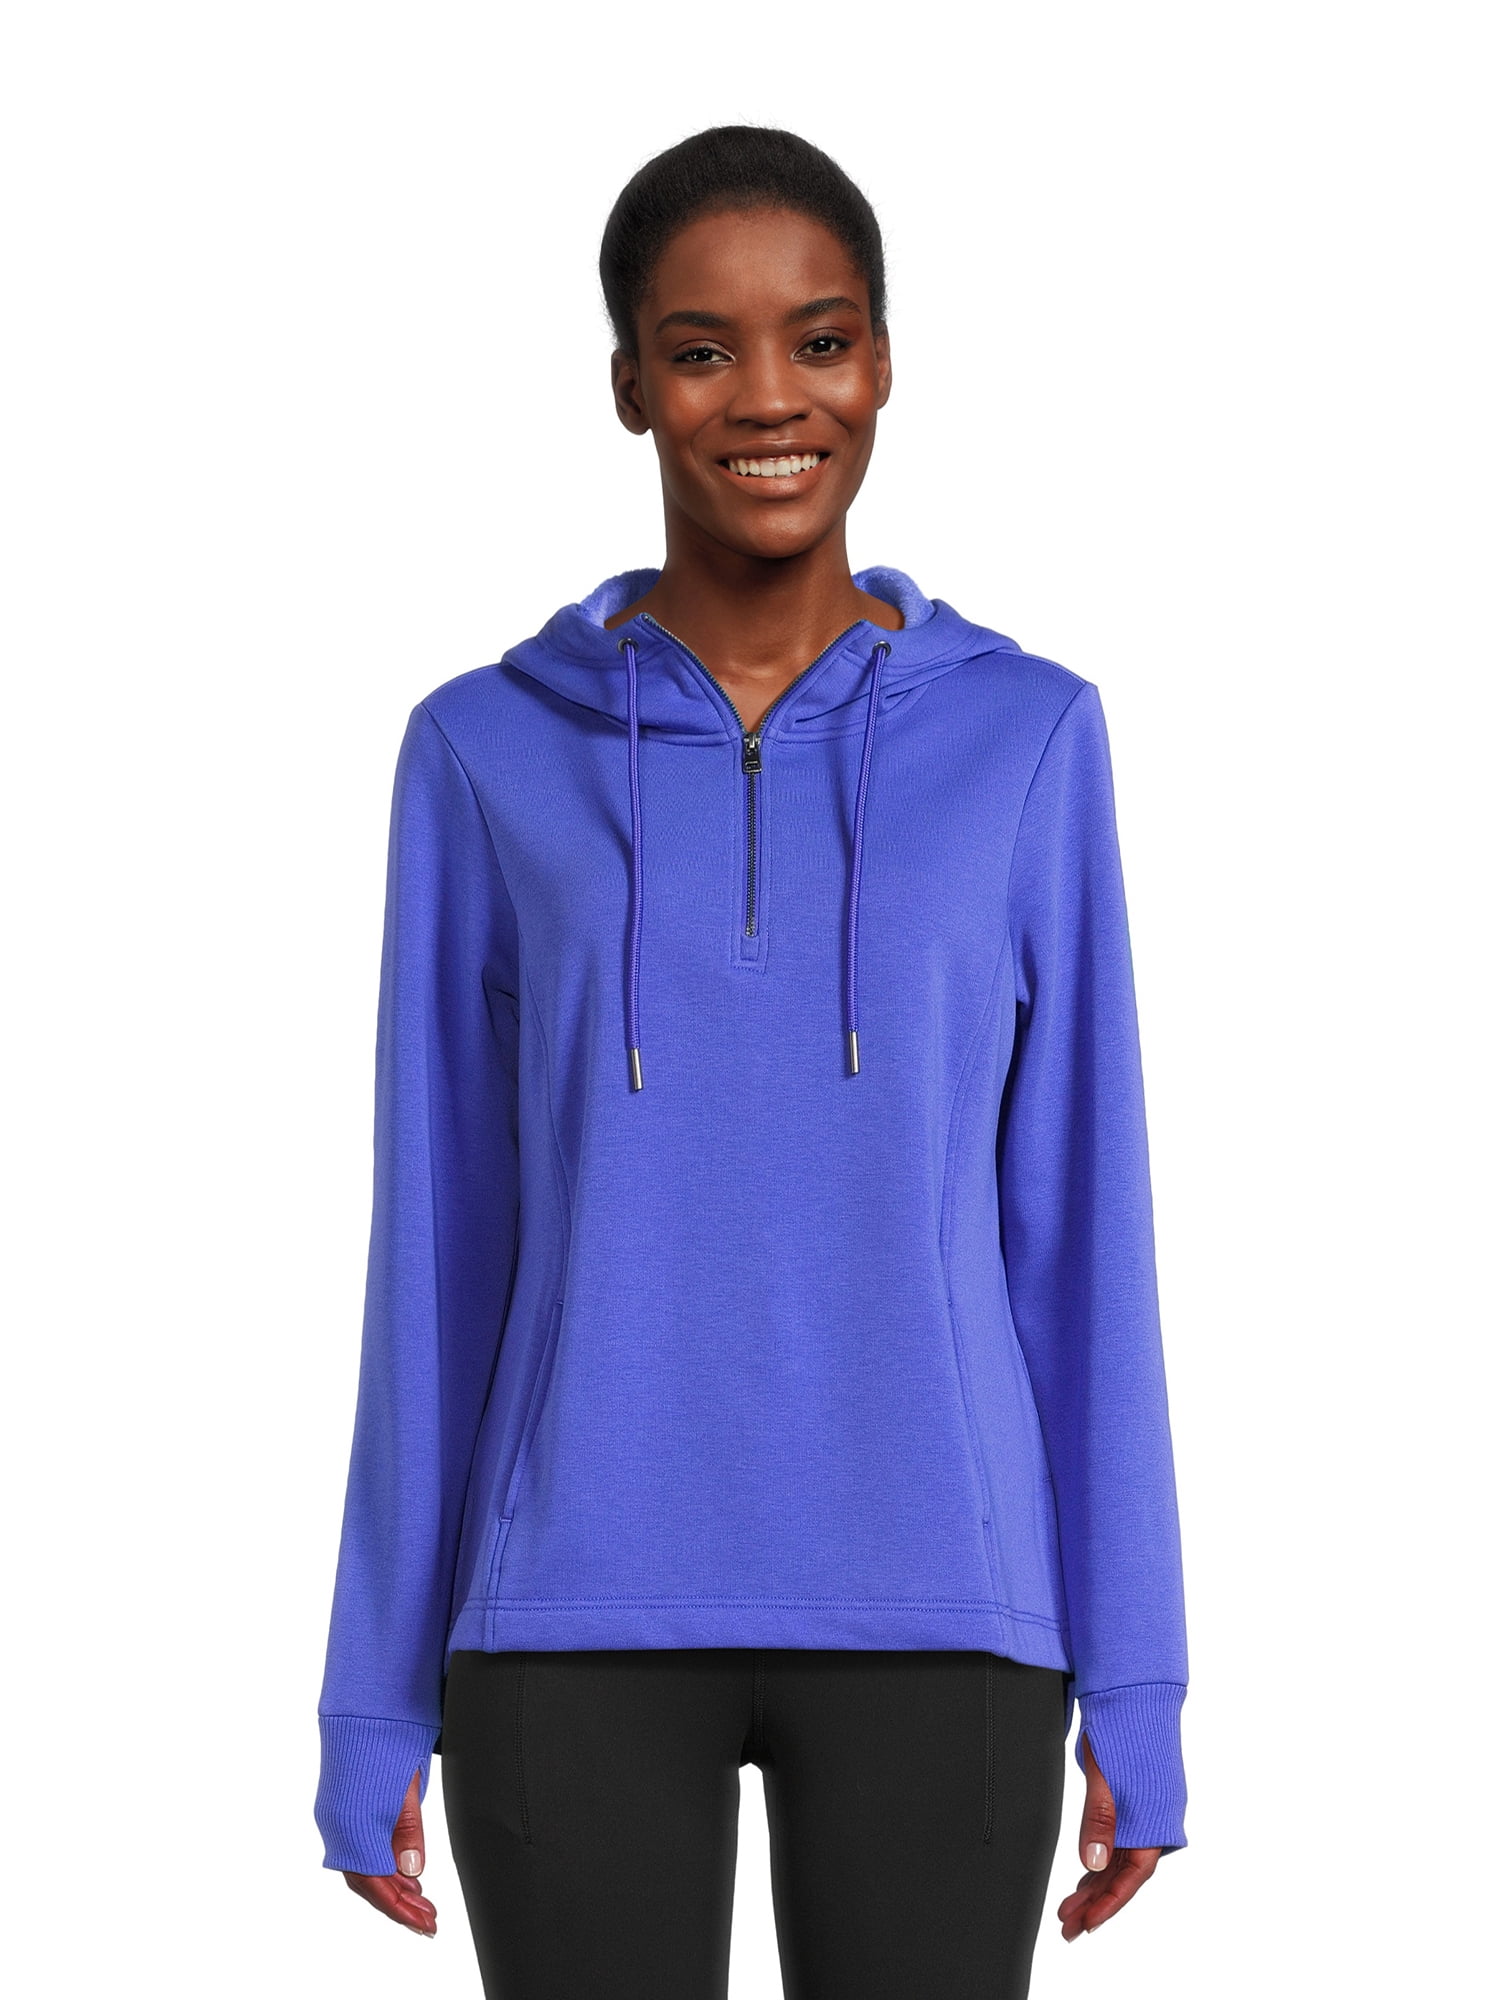 Avia Women's Quarter Zip Pullover Hoodie, Sizes XS-3XL - Walmart.com